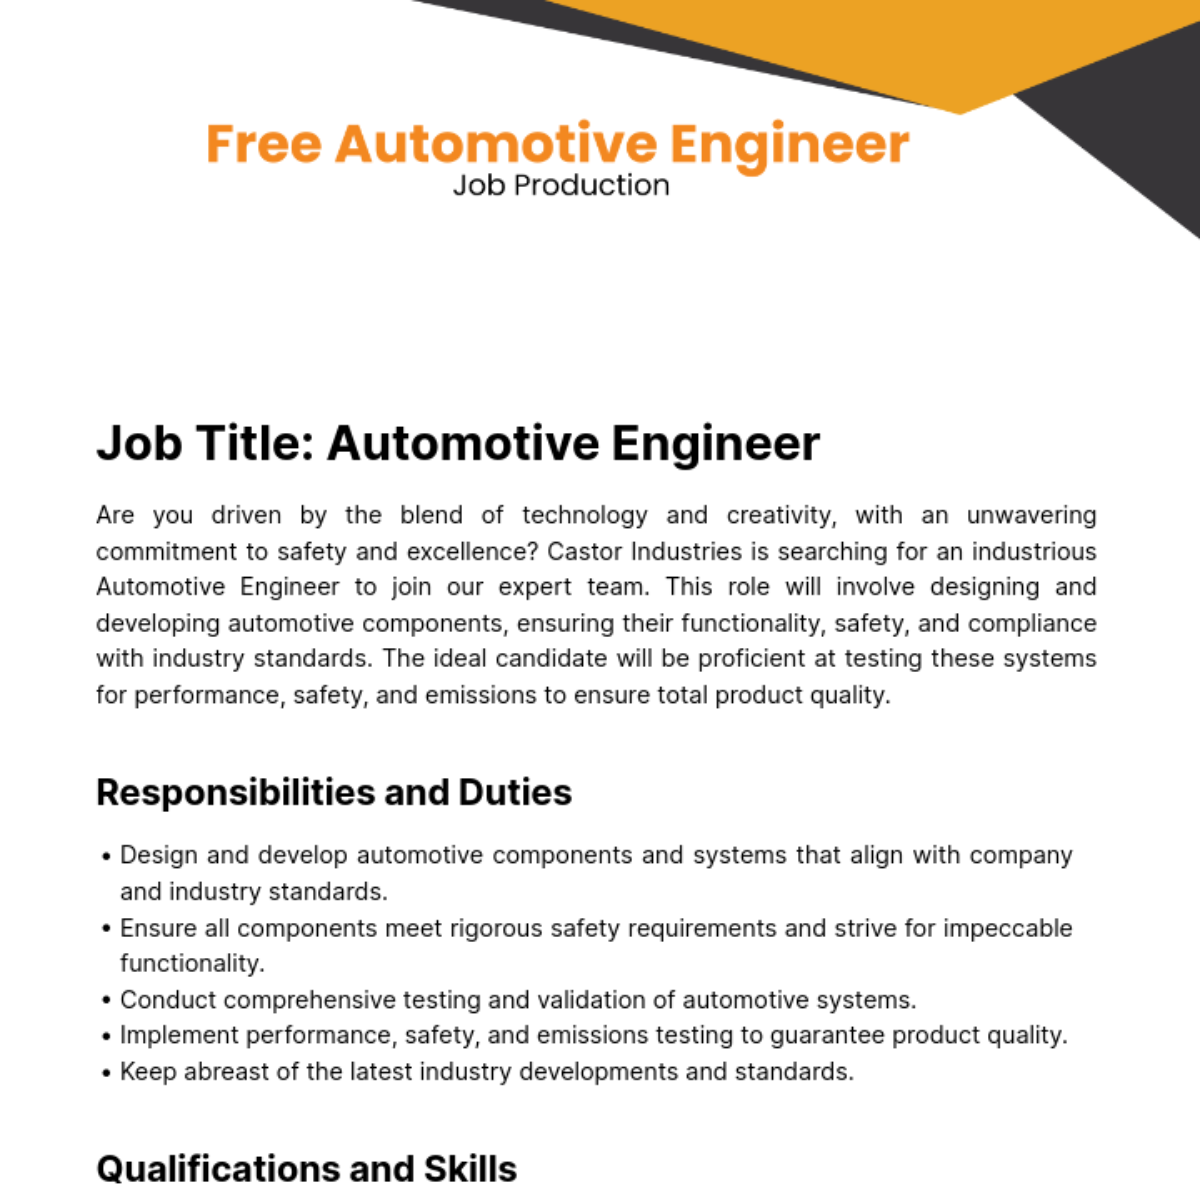 Free Automotive Engineer Job Description Template